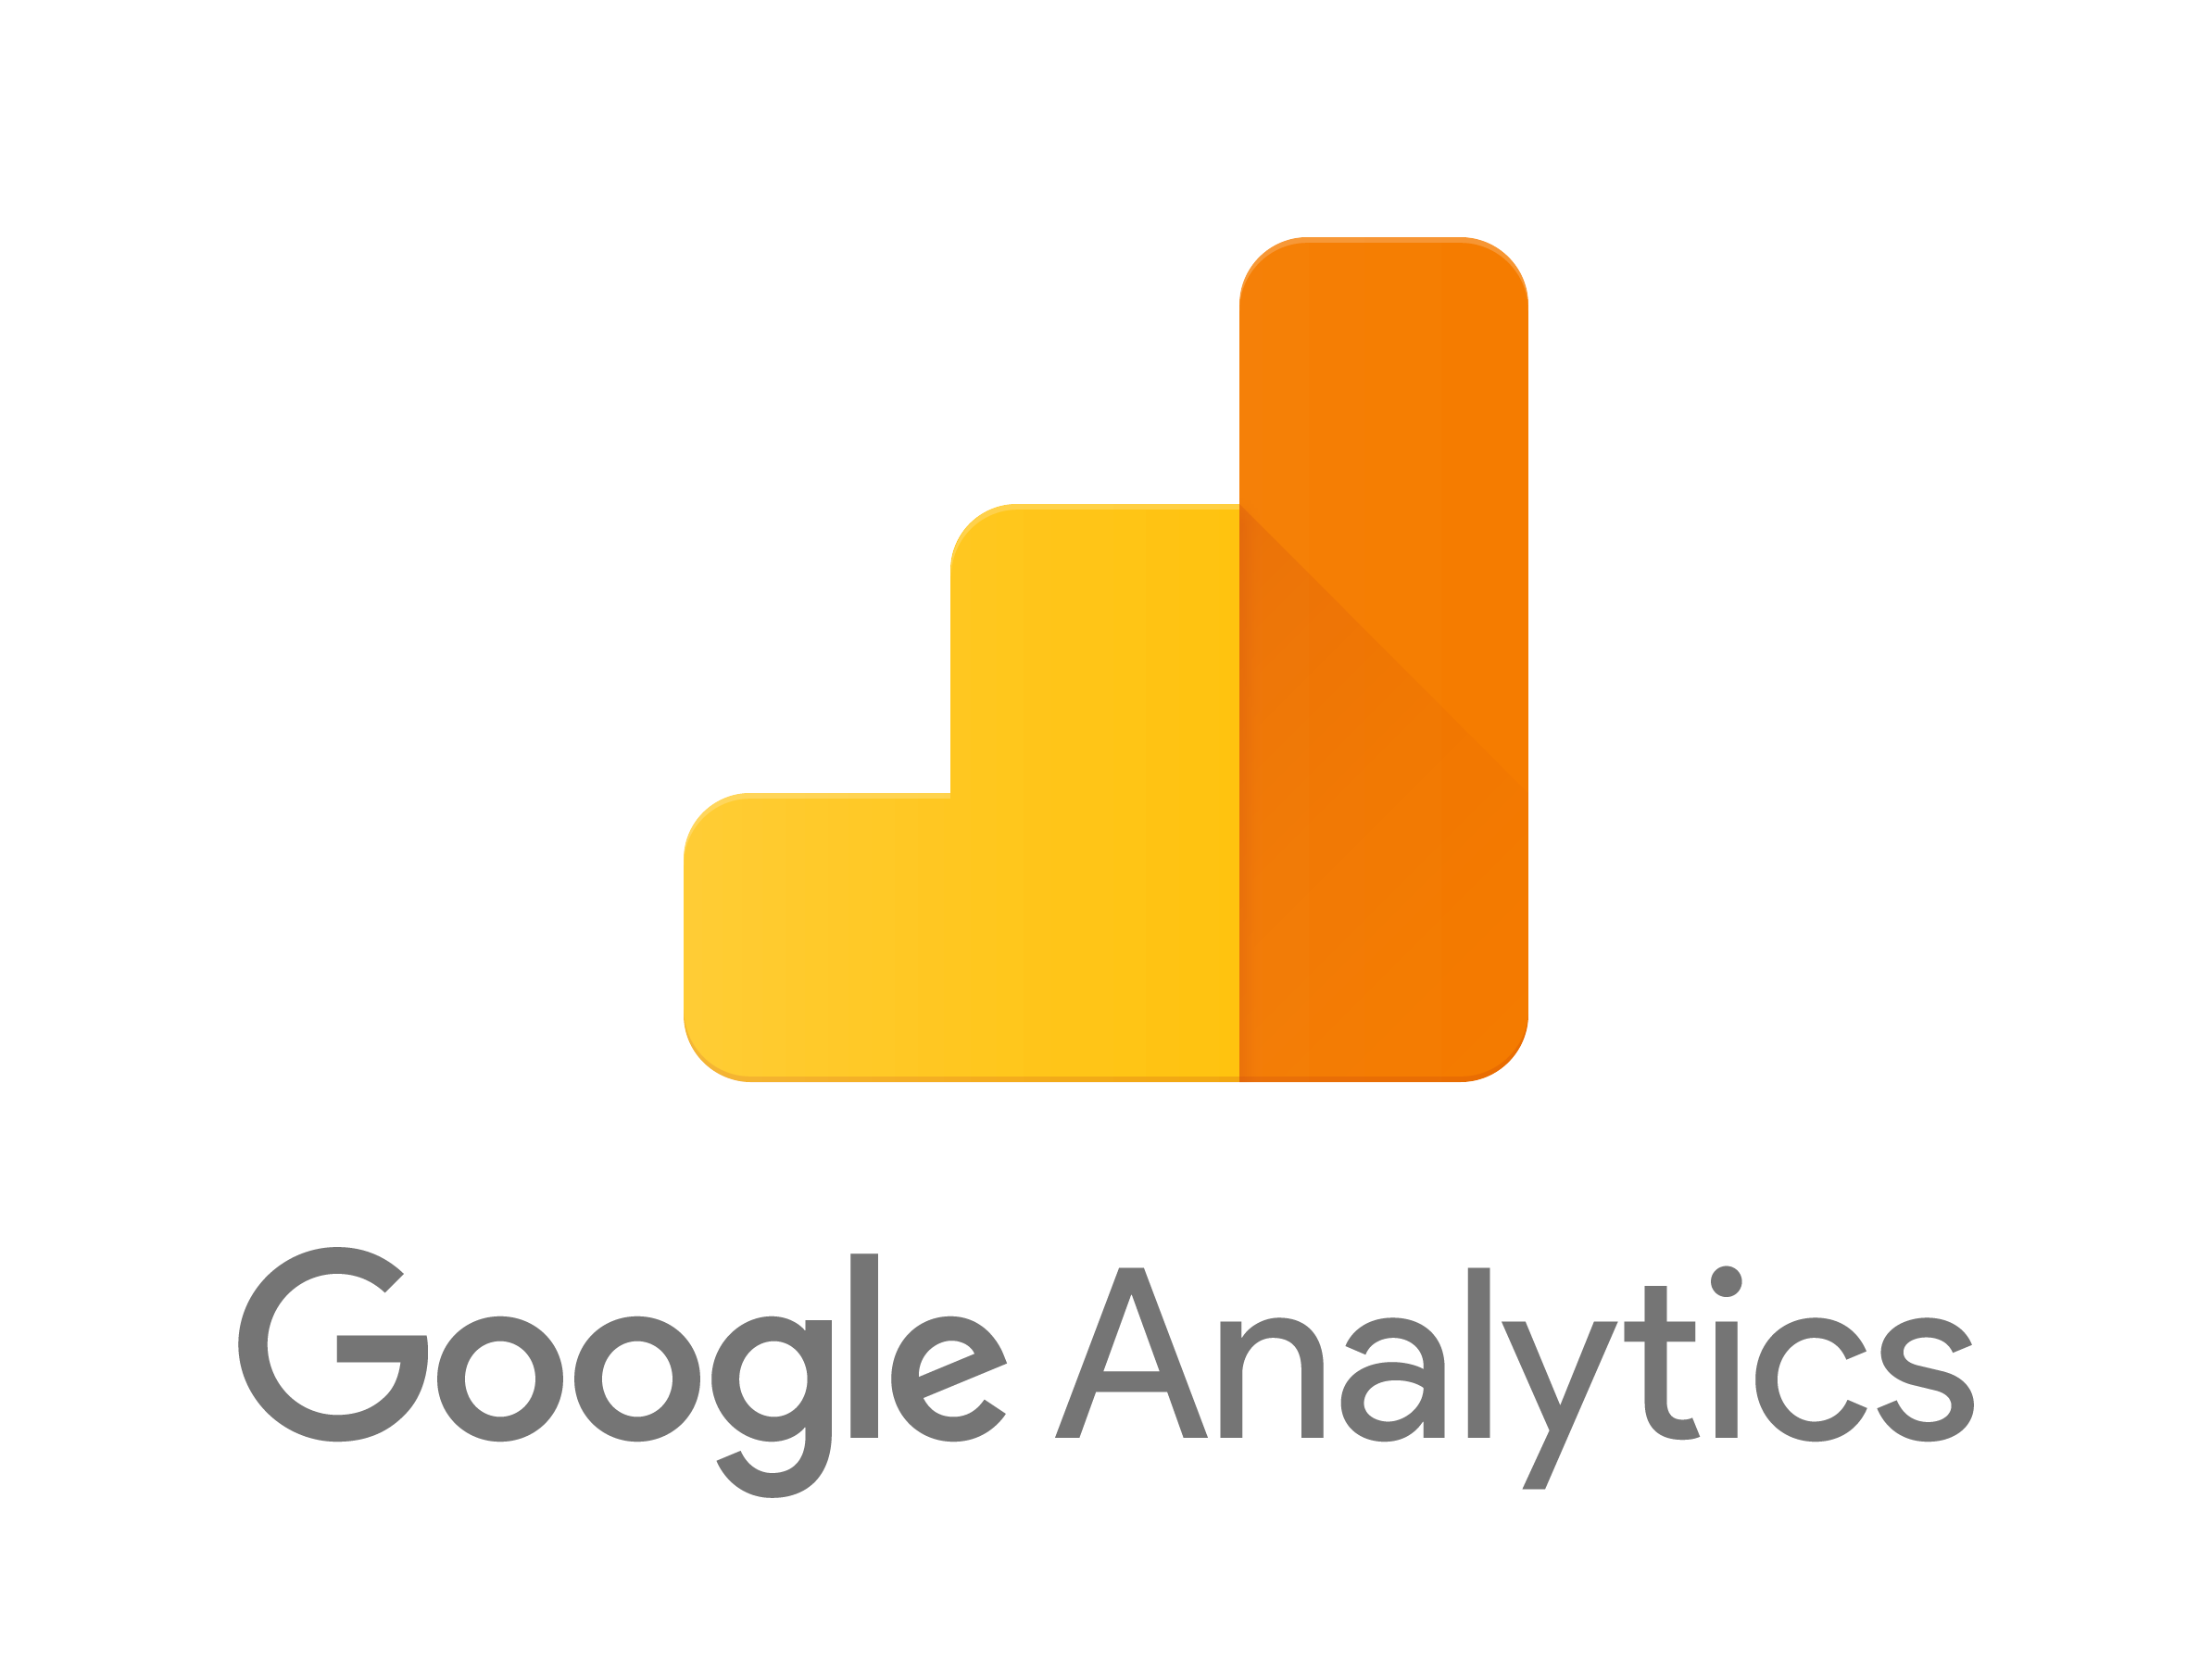 Logo van Google Analytics